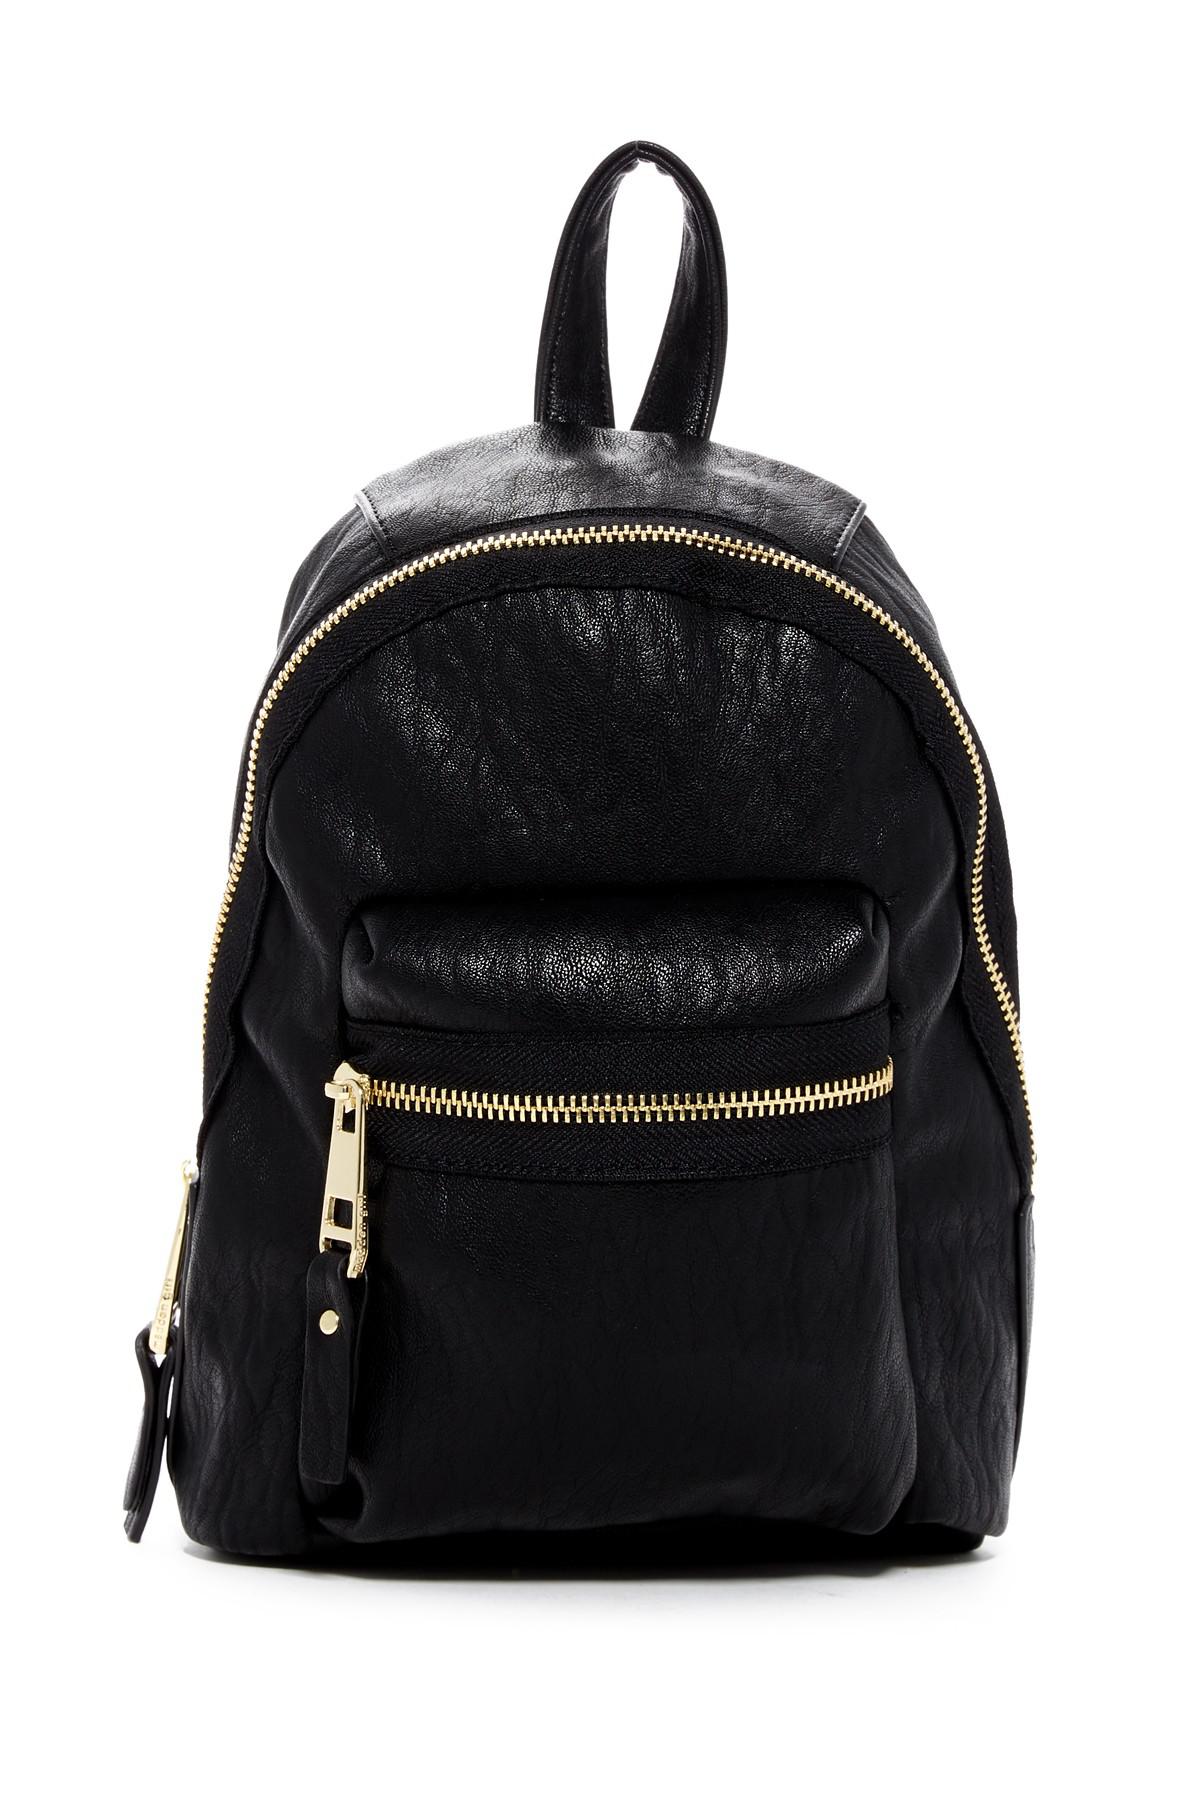 Madden Girl Mini Pvc Backpack in Black - Lyst